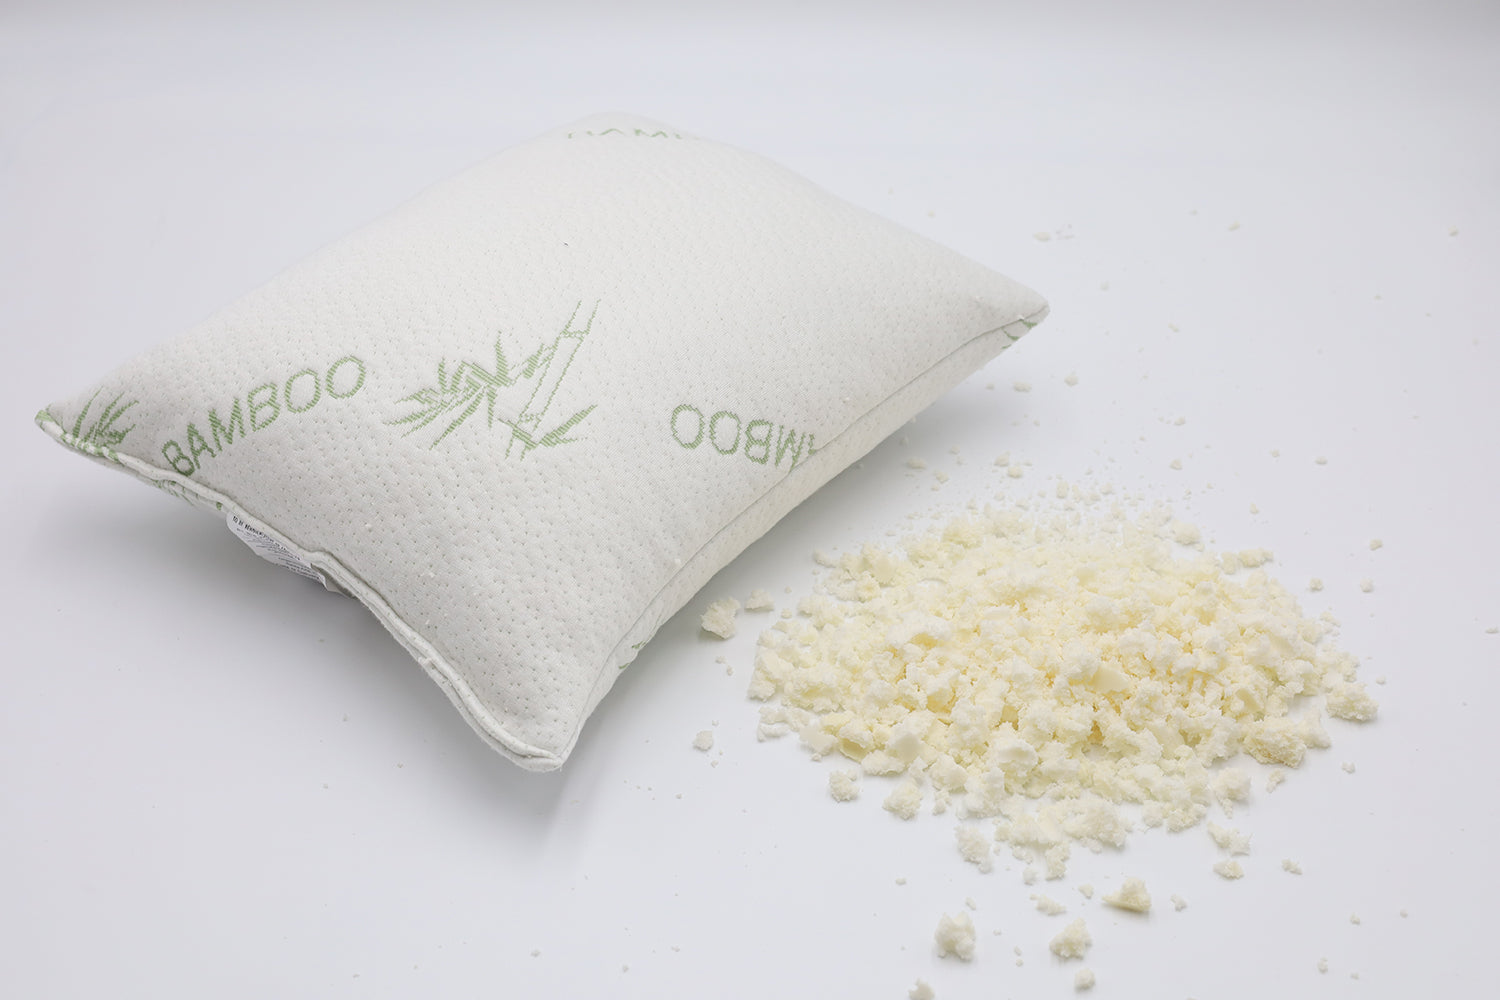 Obasan Organic Shredded Latex Pillow